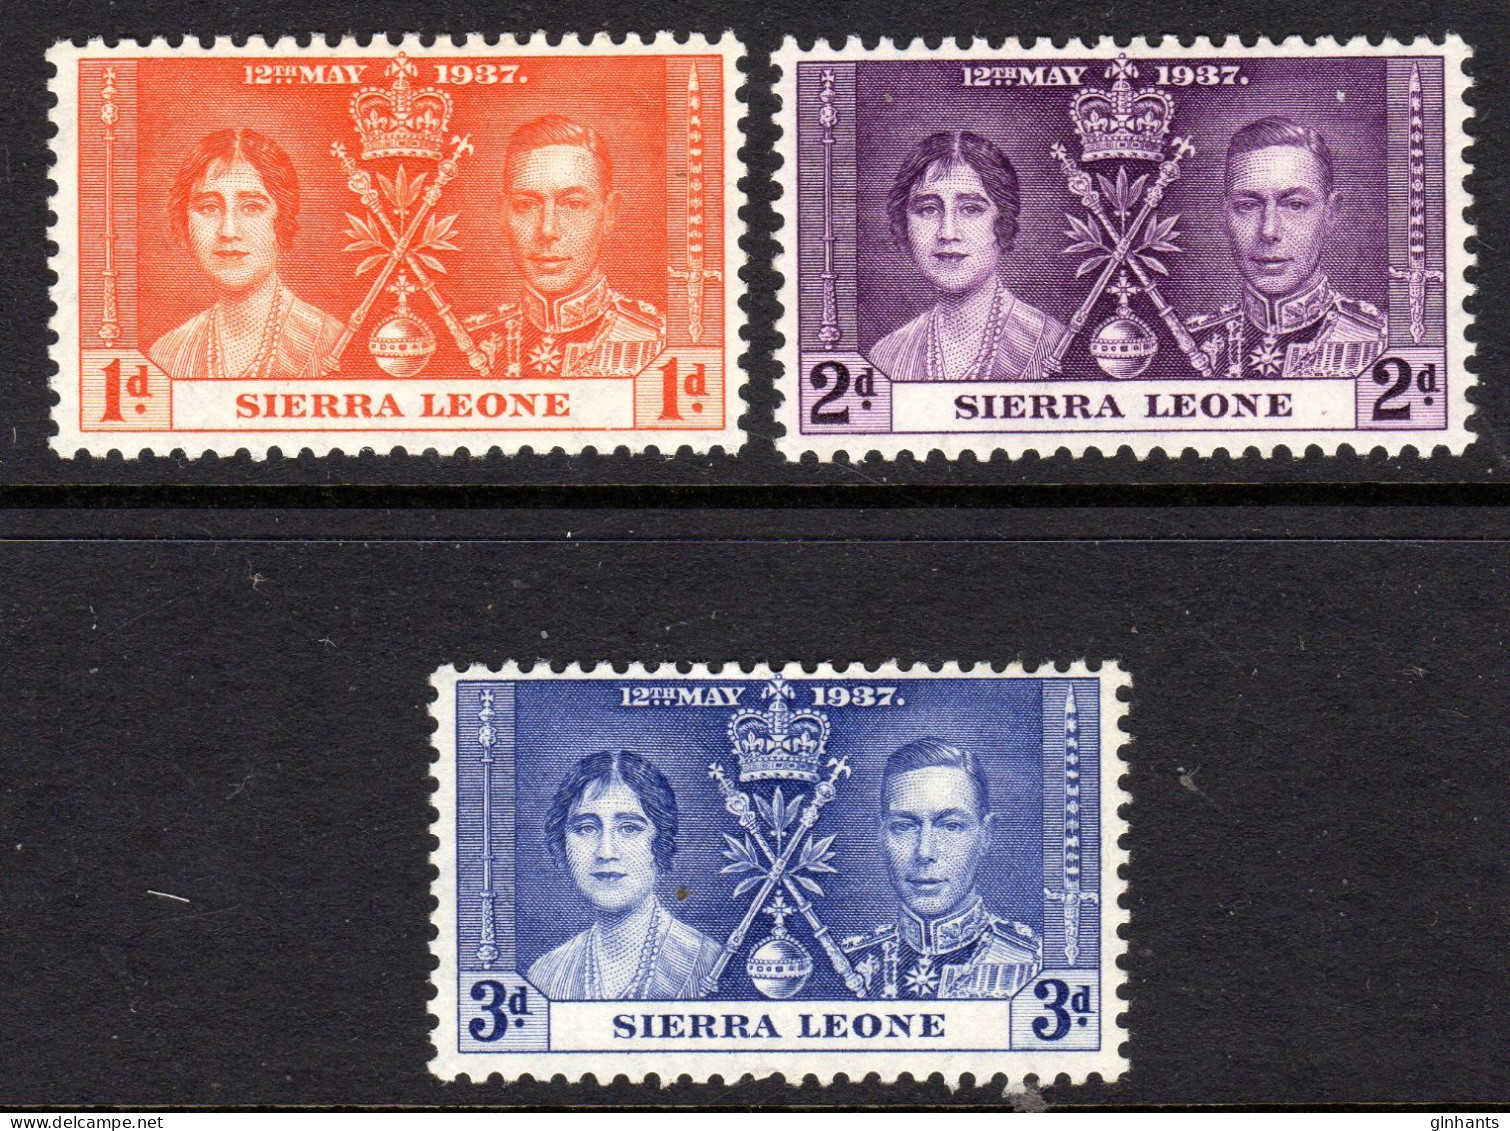 SIERRA LEONE - 1937 CORONATION SET (3V) FINE MOUNTED MINT MM * SG 185-187 REF B - Sierra Leone (...-1960)